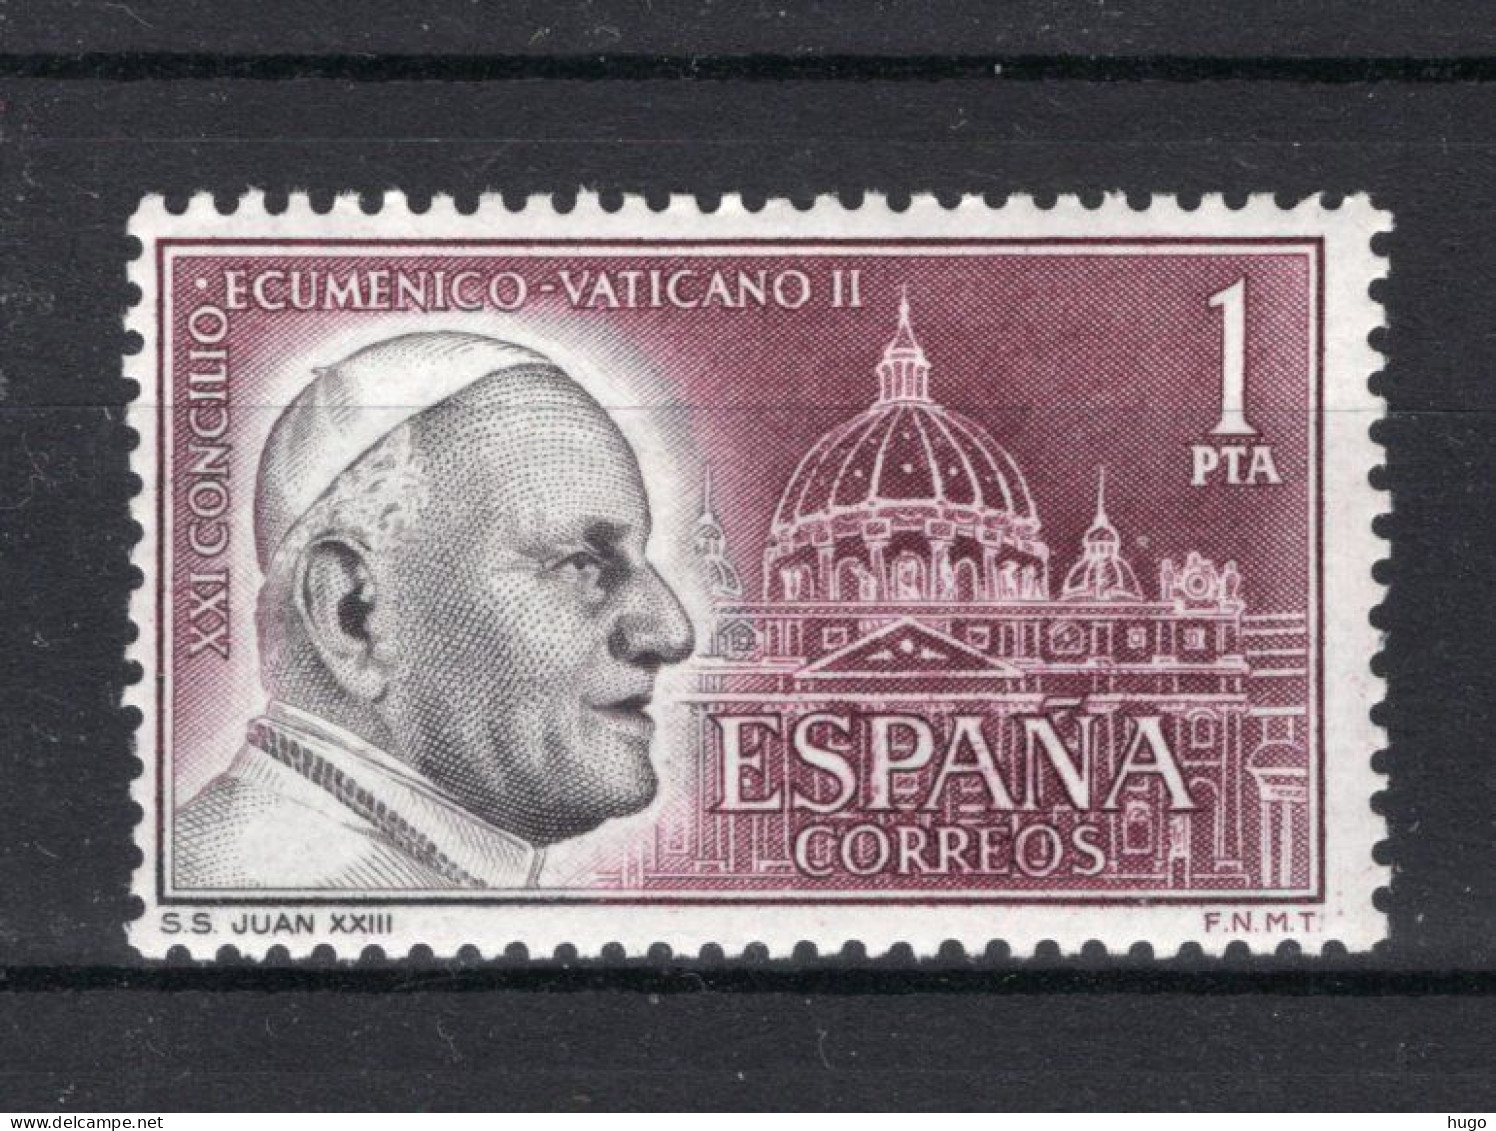 SPANJE Yt. 1147 MNH 1962 - Unused Stamps